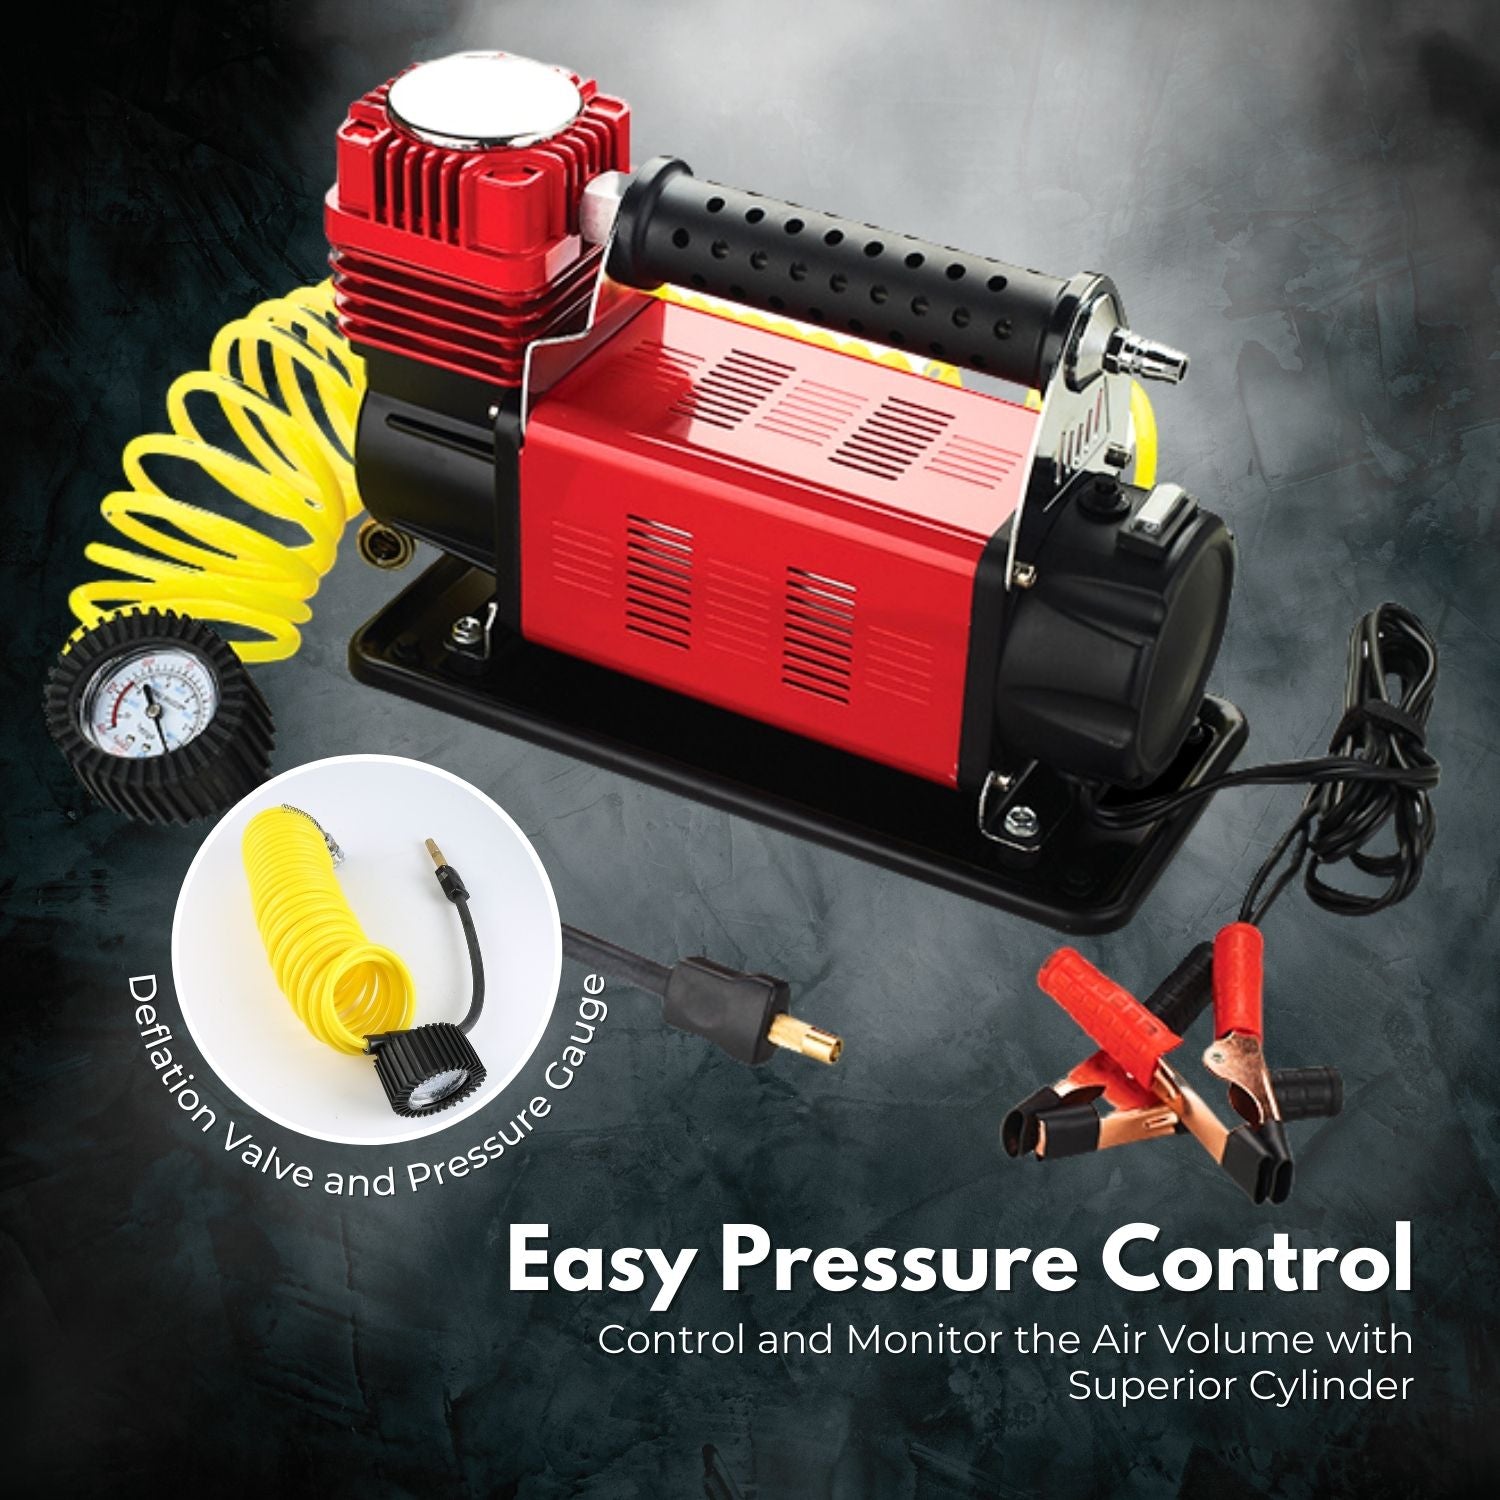 RYNOMATE 540W Car Air Compressor for Car Tires (Red)